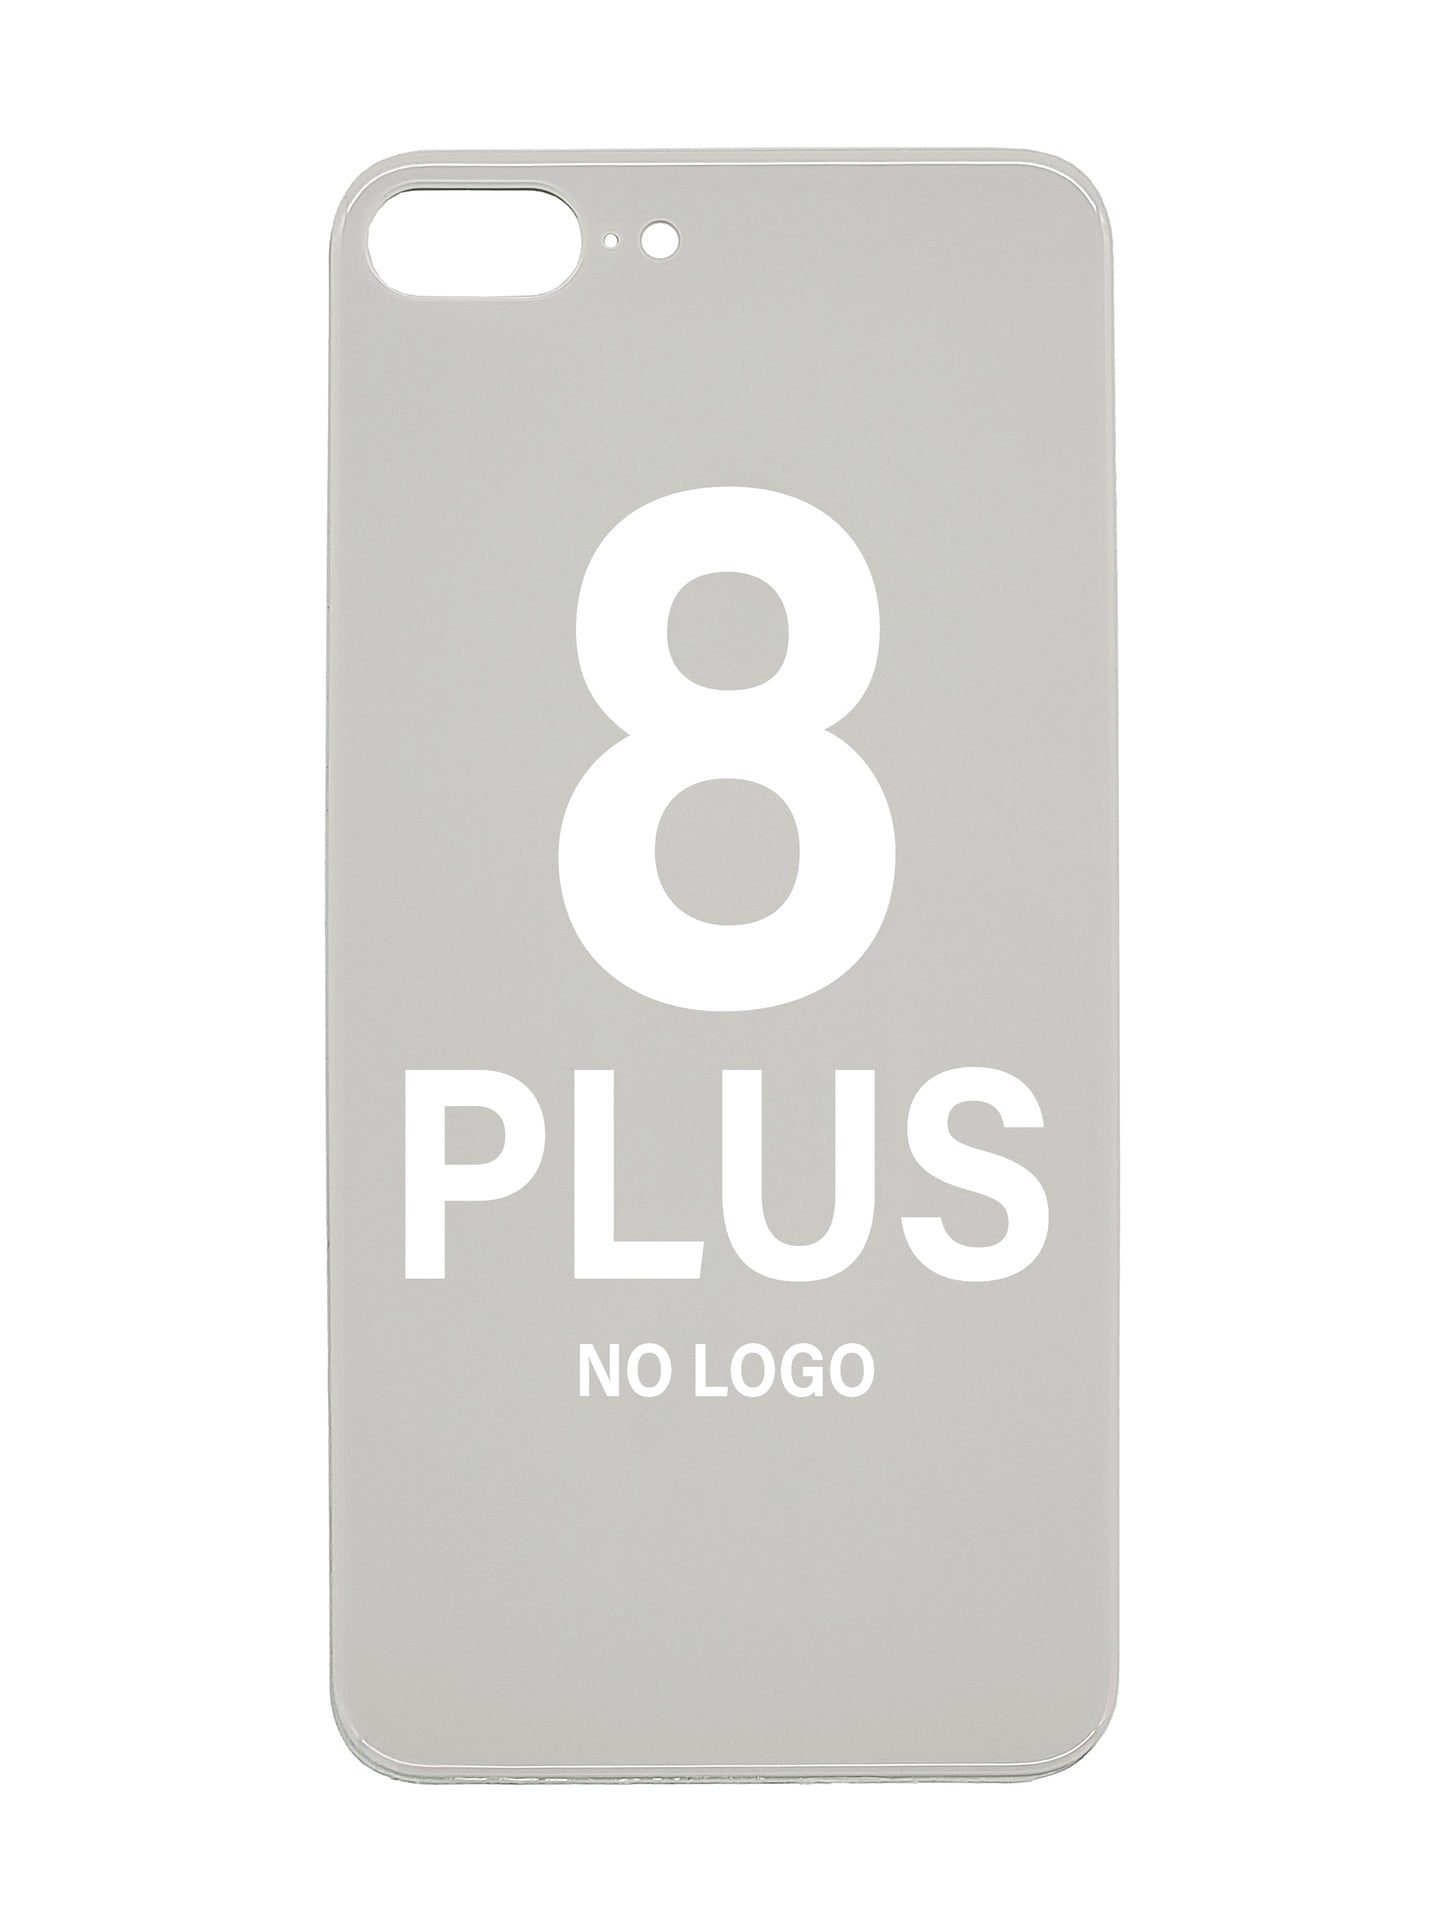 iPhone 8 Plus Back Glass (No Logo) (White)